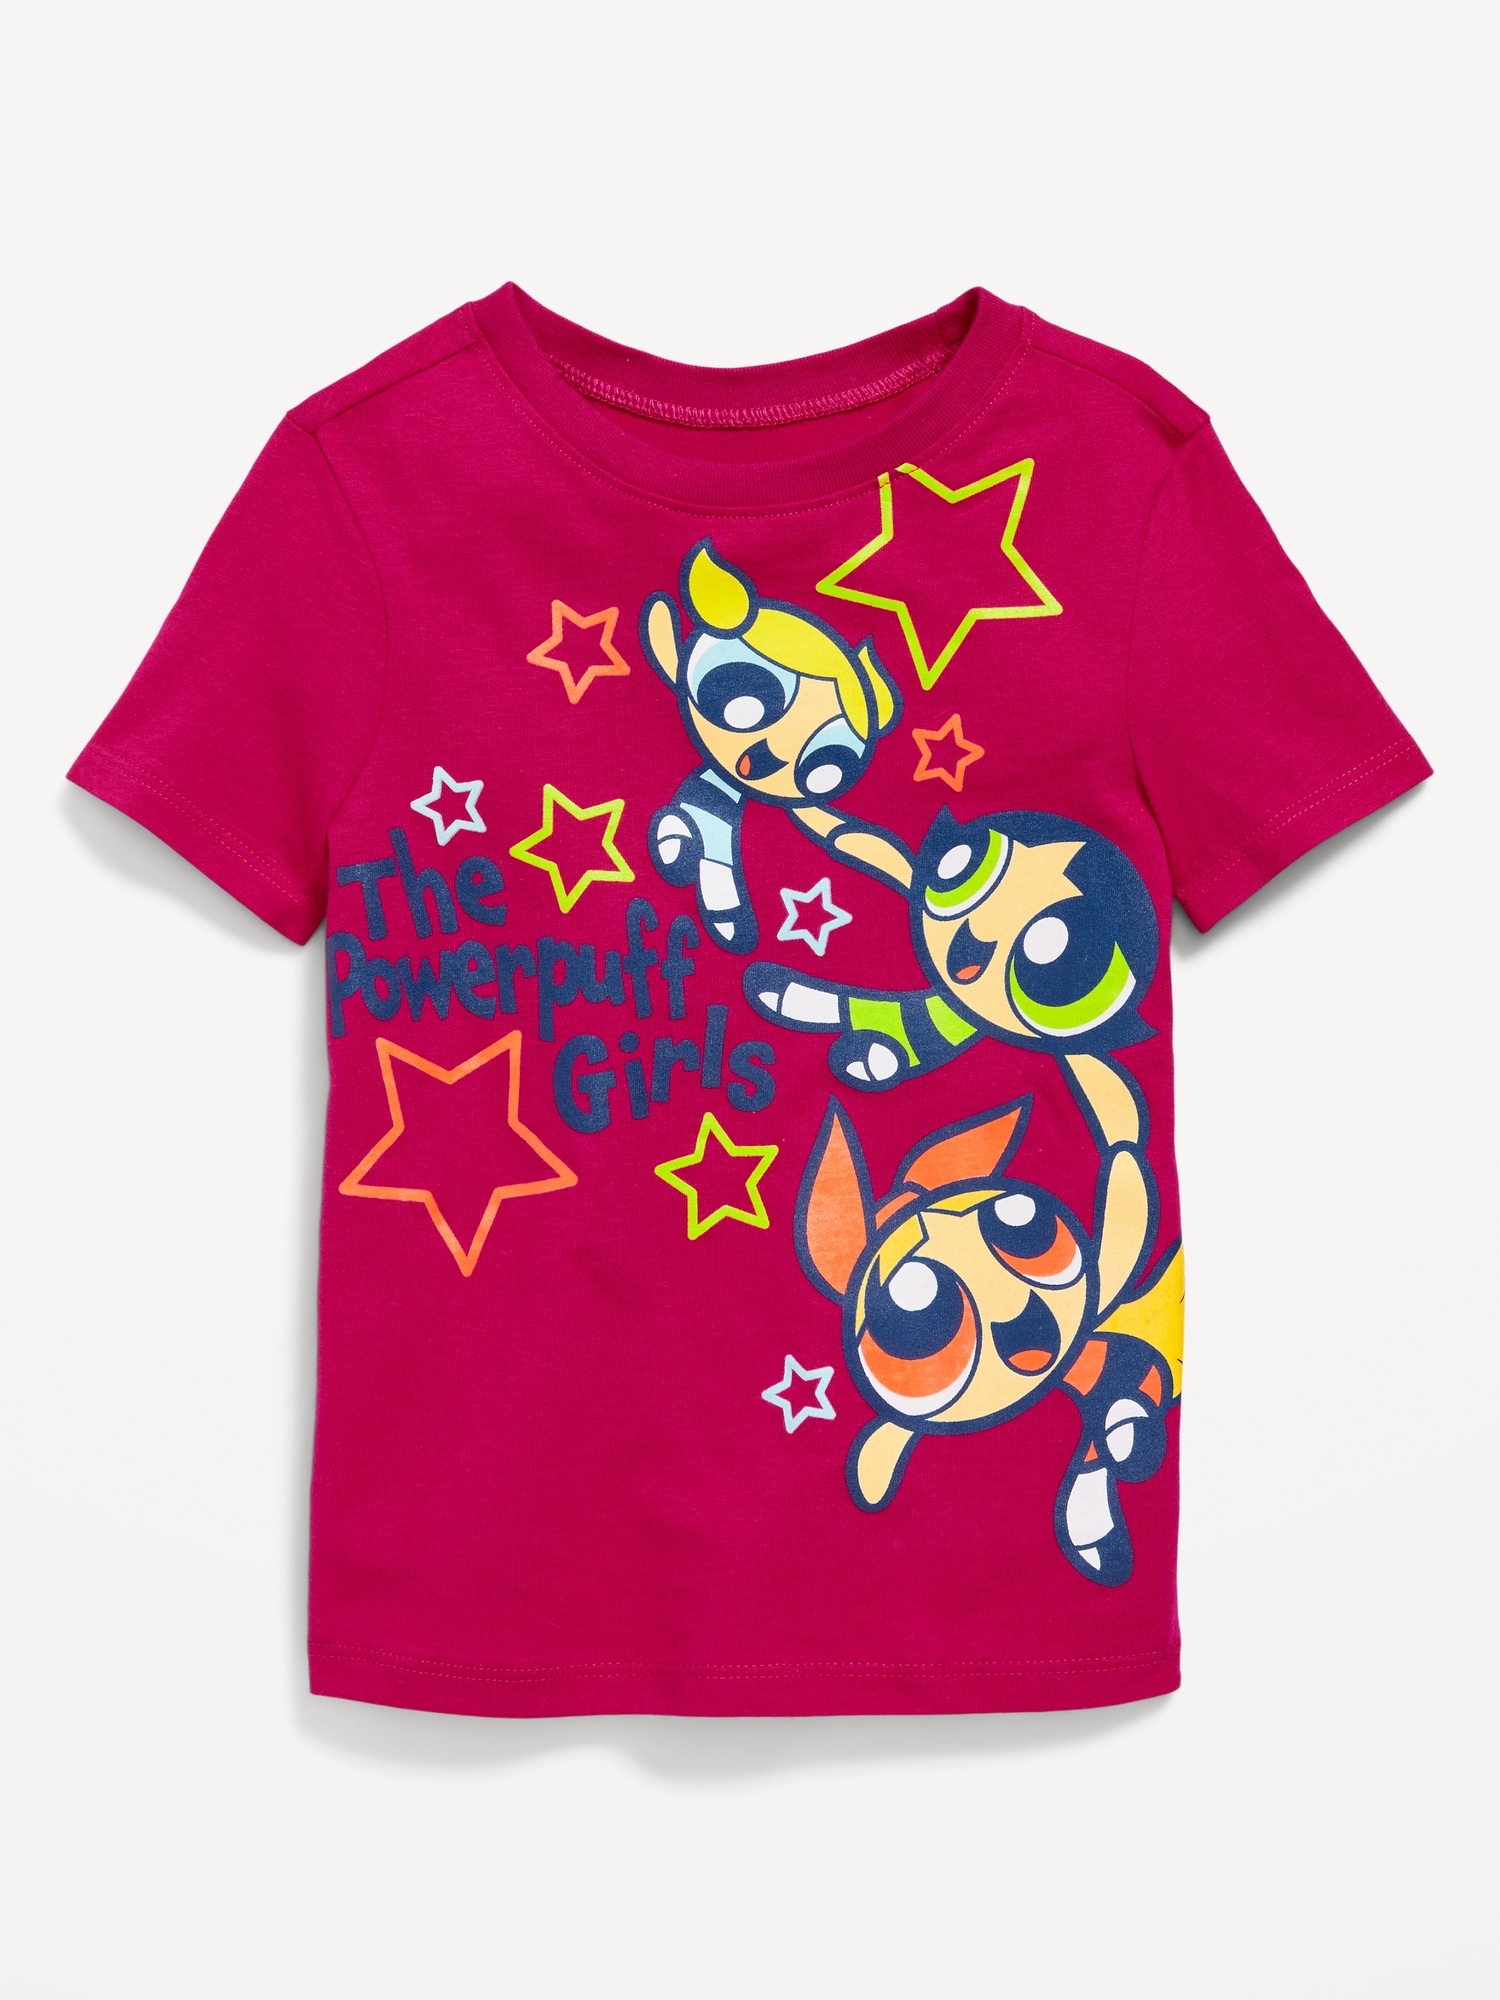 The Powerpuff Girls™ Unisex Graphic T-Shirt for Toddler